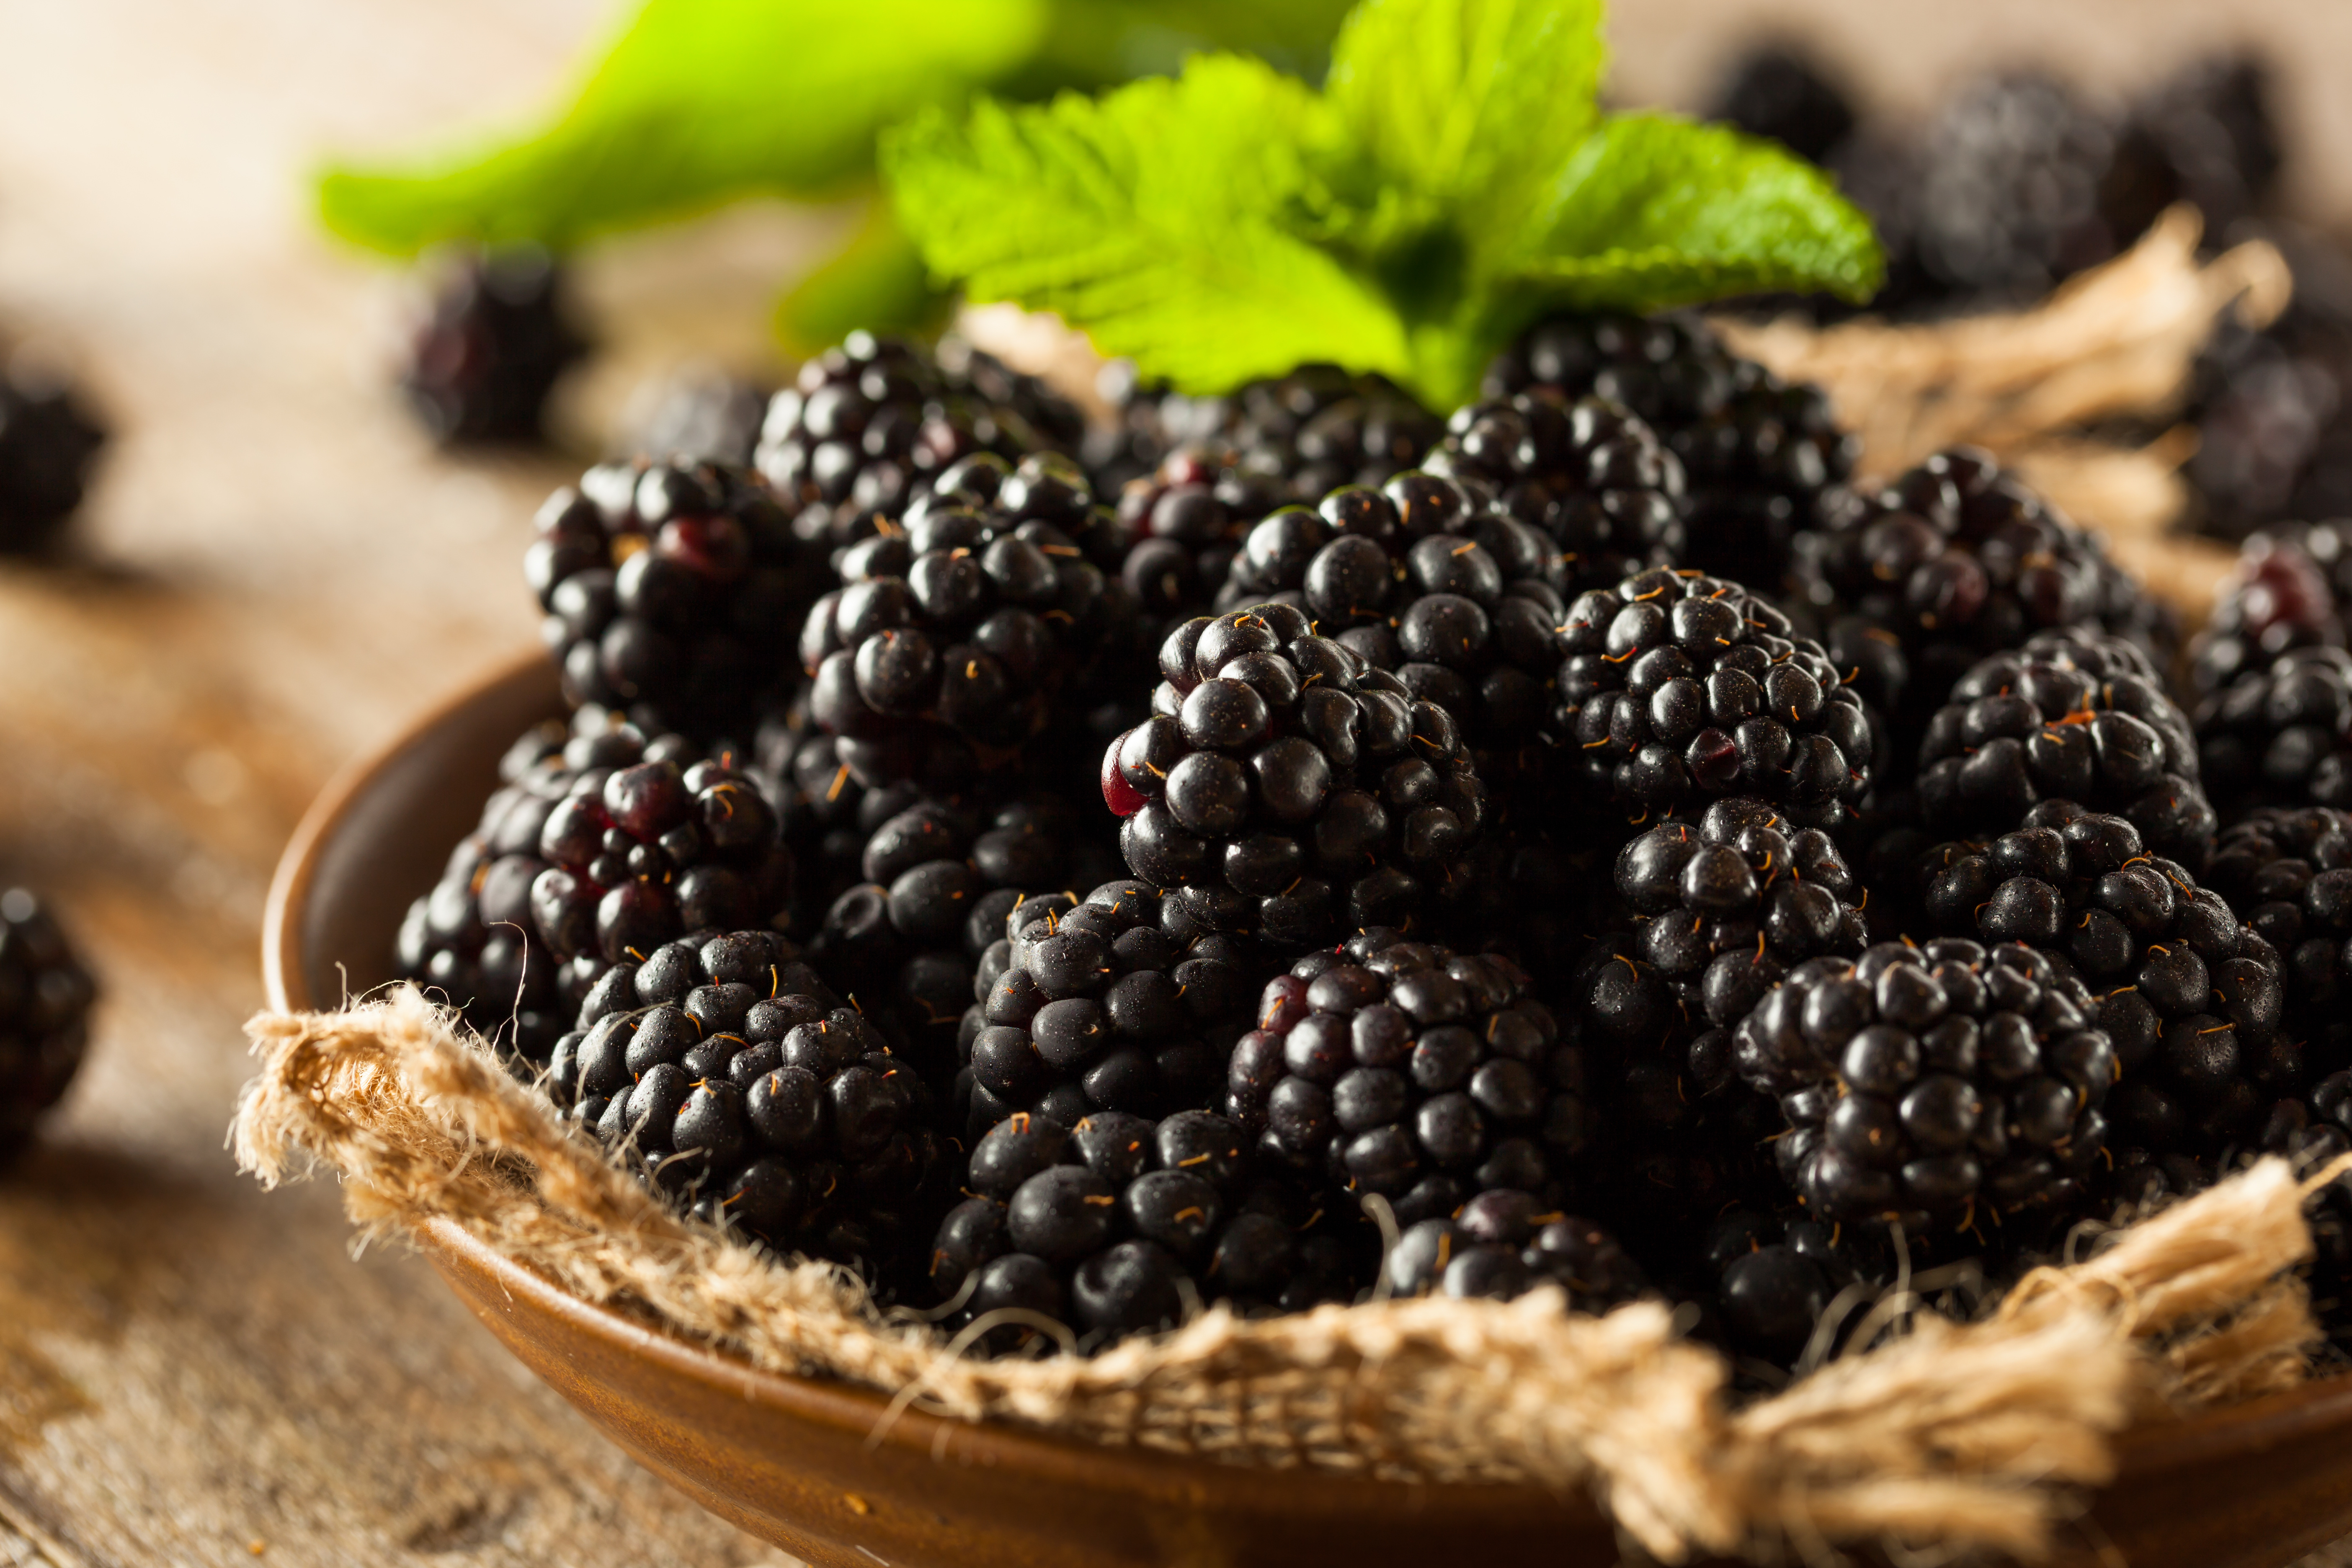 blackberry - blackberries - berries - health benefits - nutritional value - beery season - summer season - summer fruit - fruit - varietals